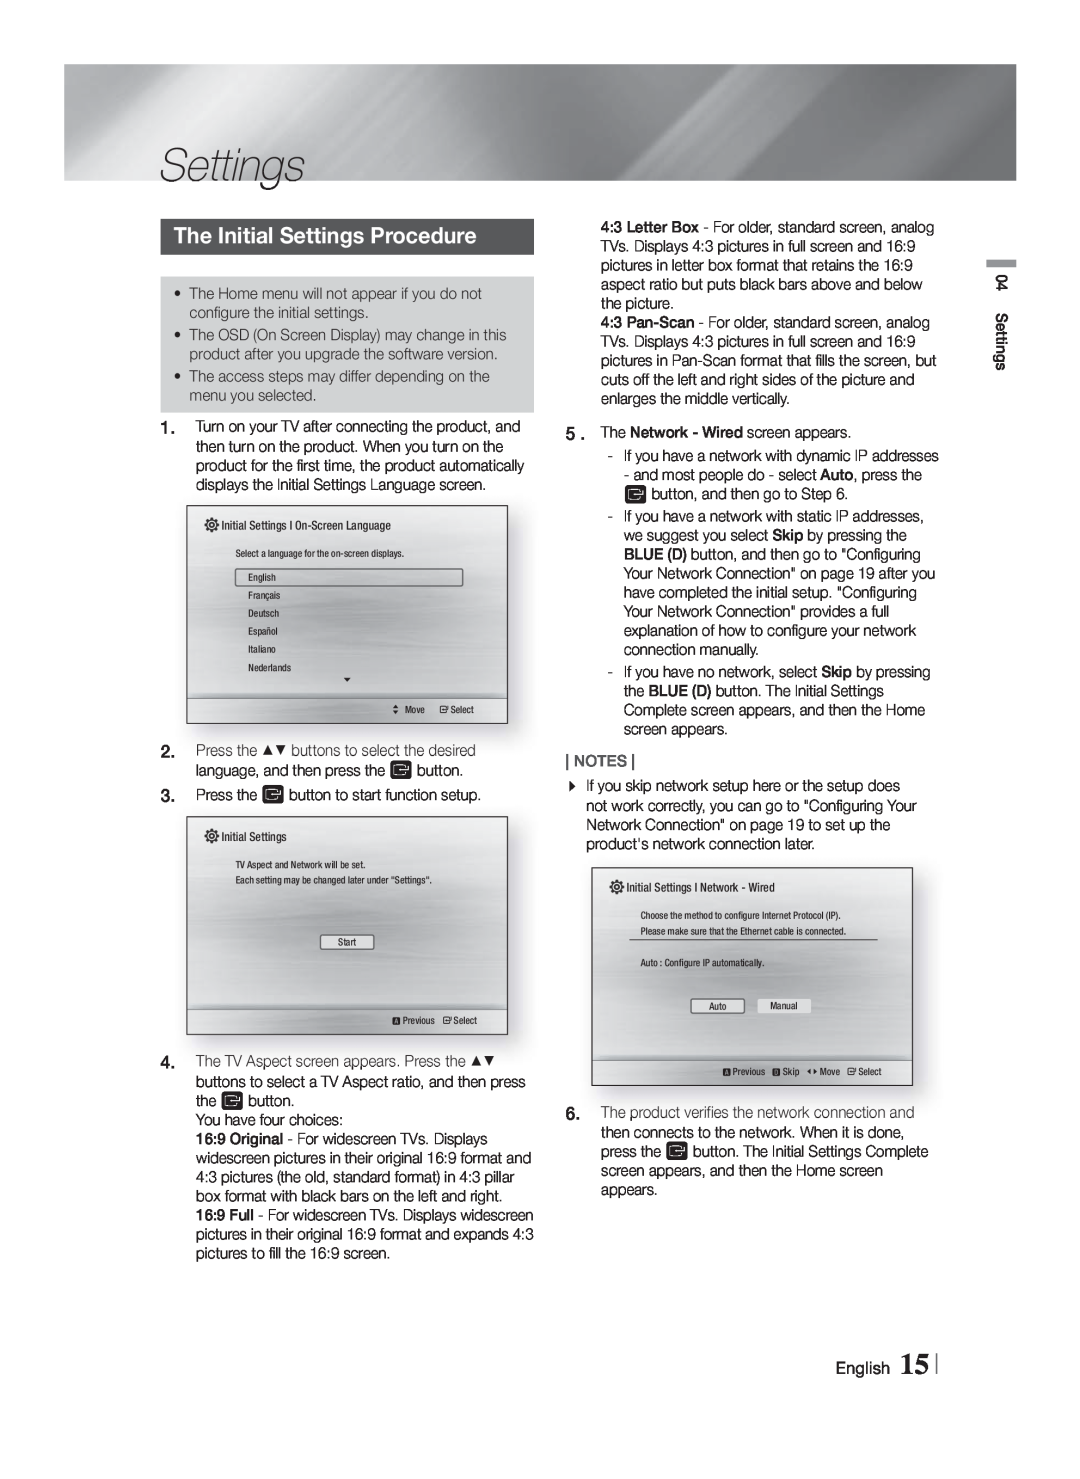 Samsung HTF4500ZA user manual The Initial Settings Procedure, English 